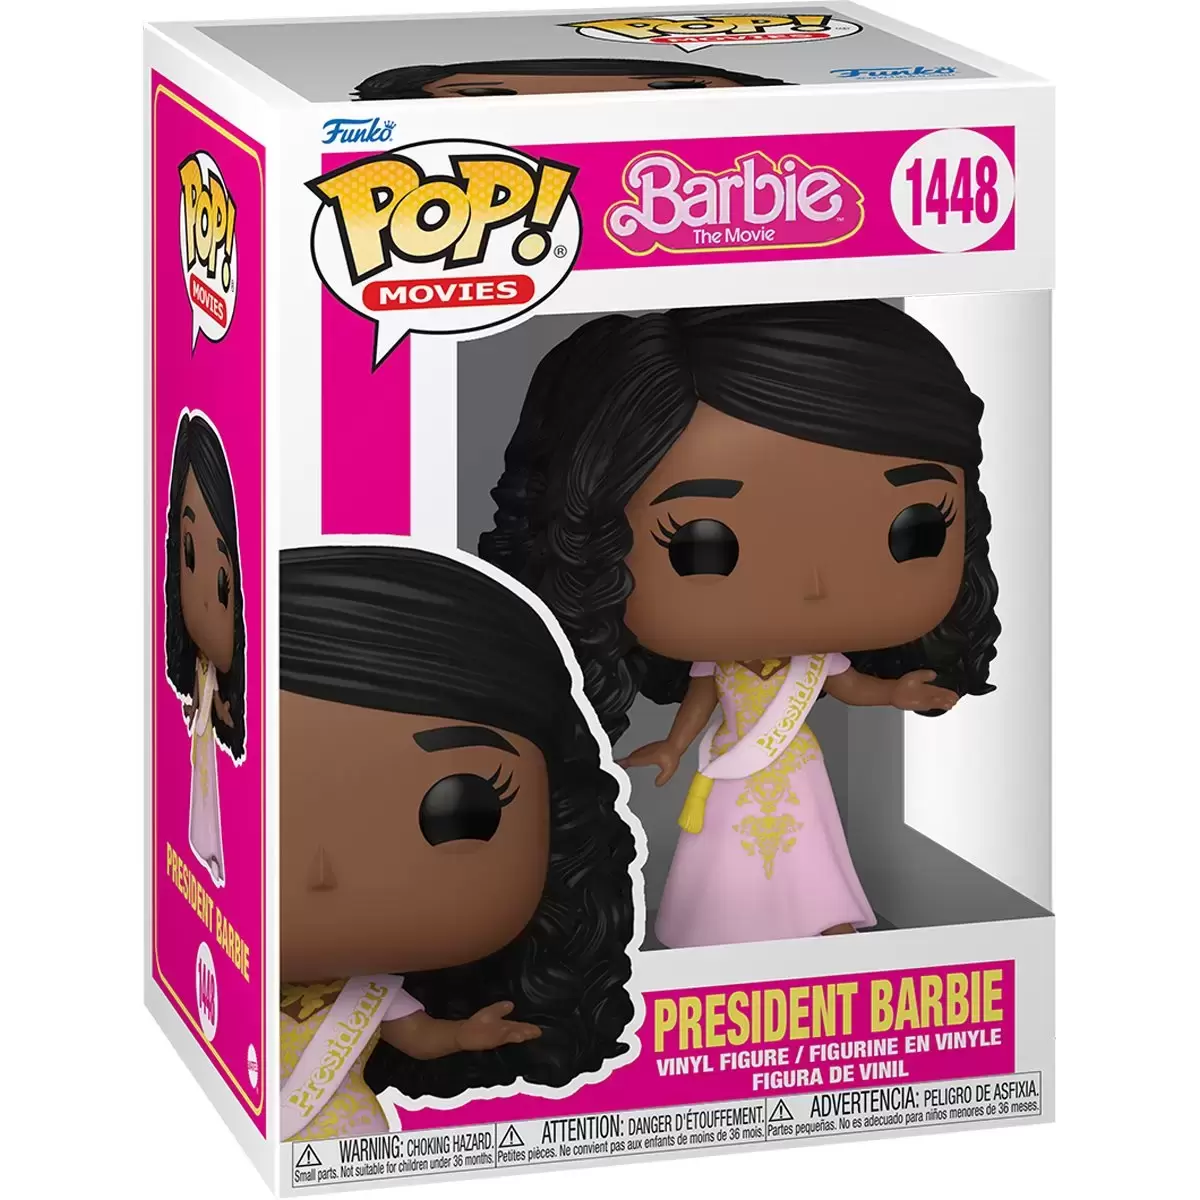 POP! Movies - Barbie The Movie  - President Barbie